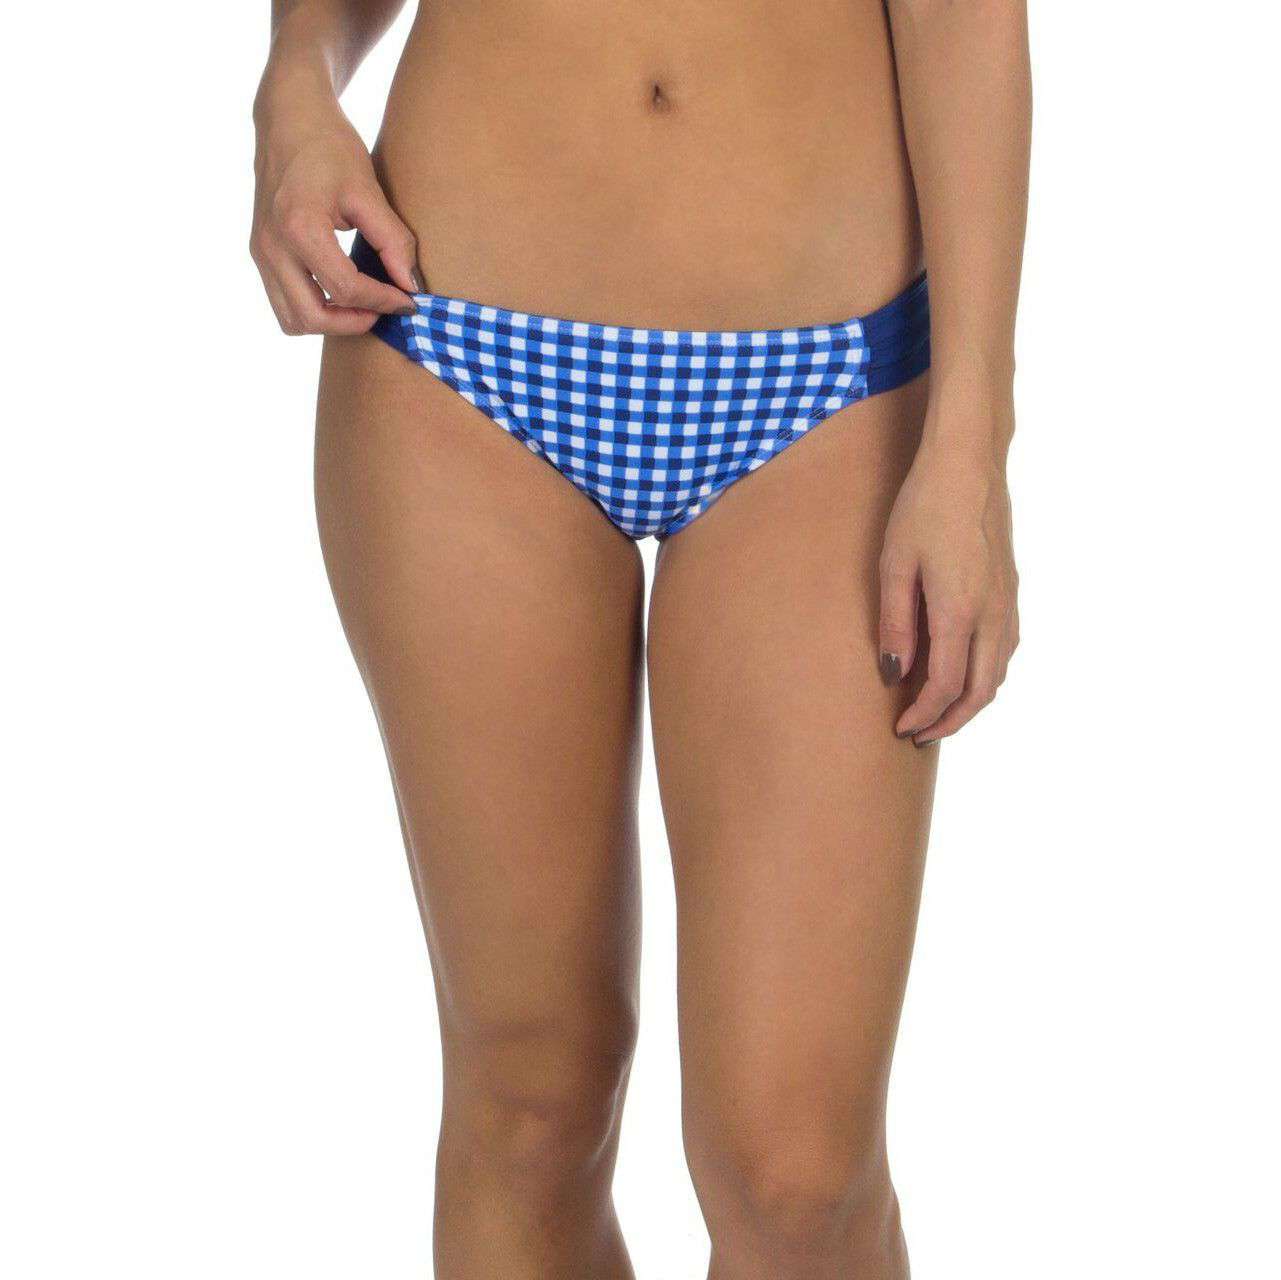 Gingham Hipster Bikini Bottom in Navy by Lauren James - Country Club Prep